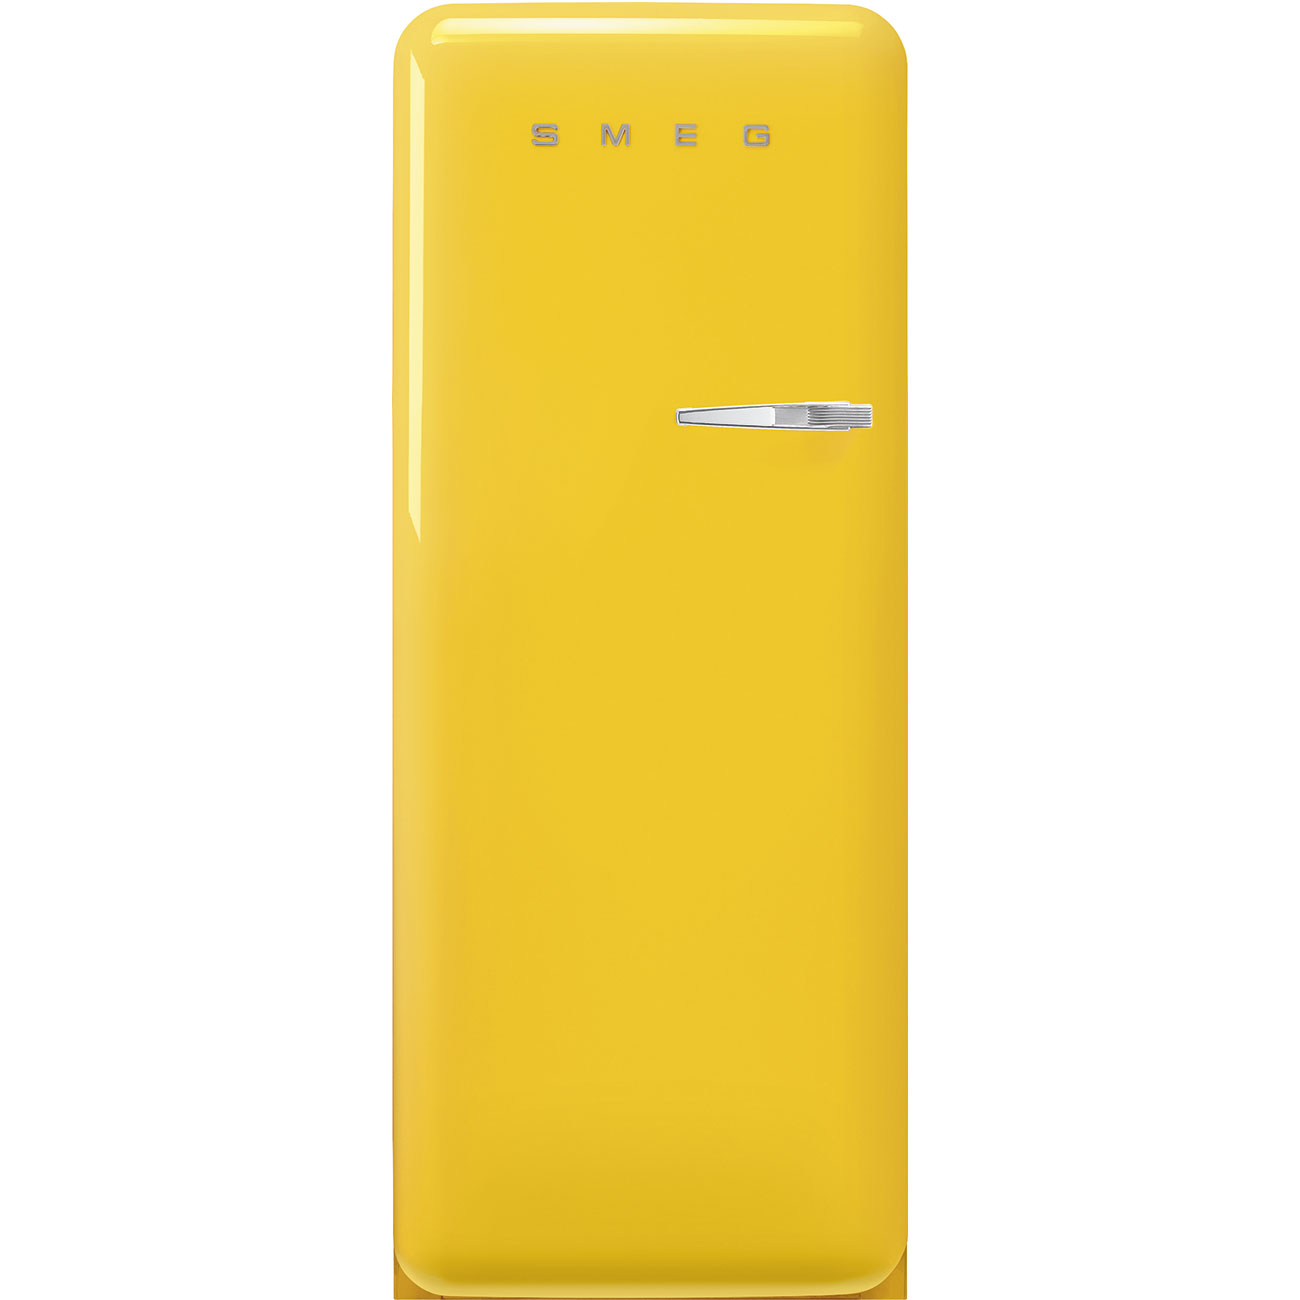 Yellow refrigerator - Smeg_1